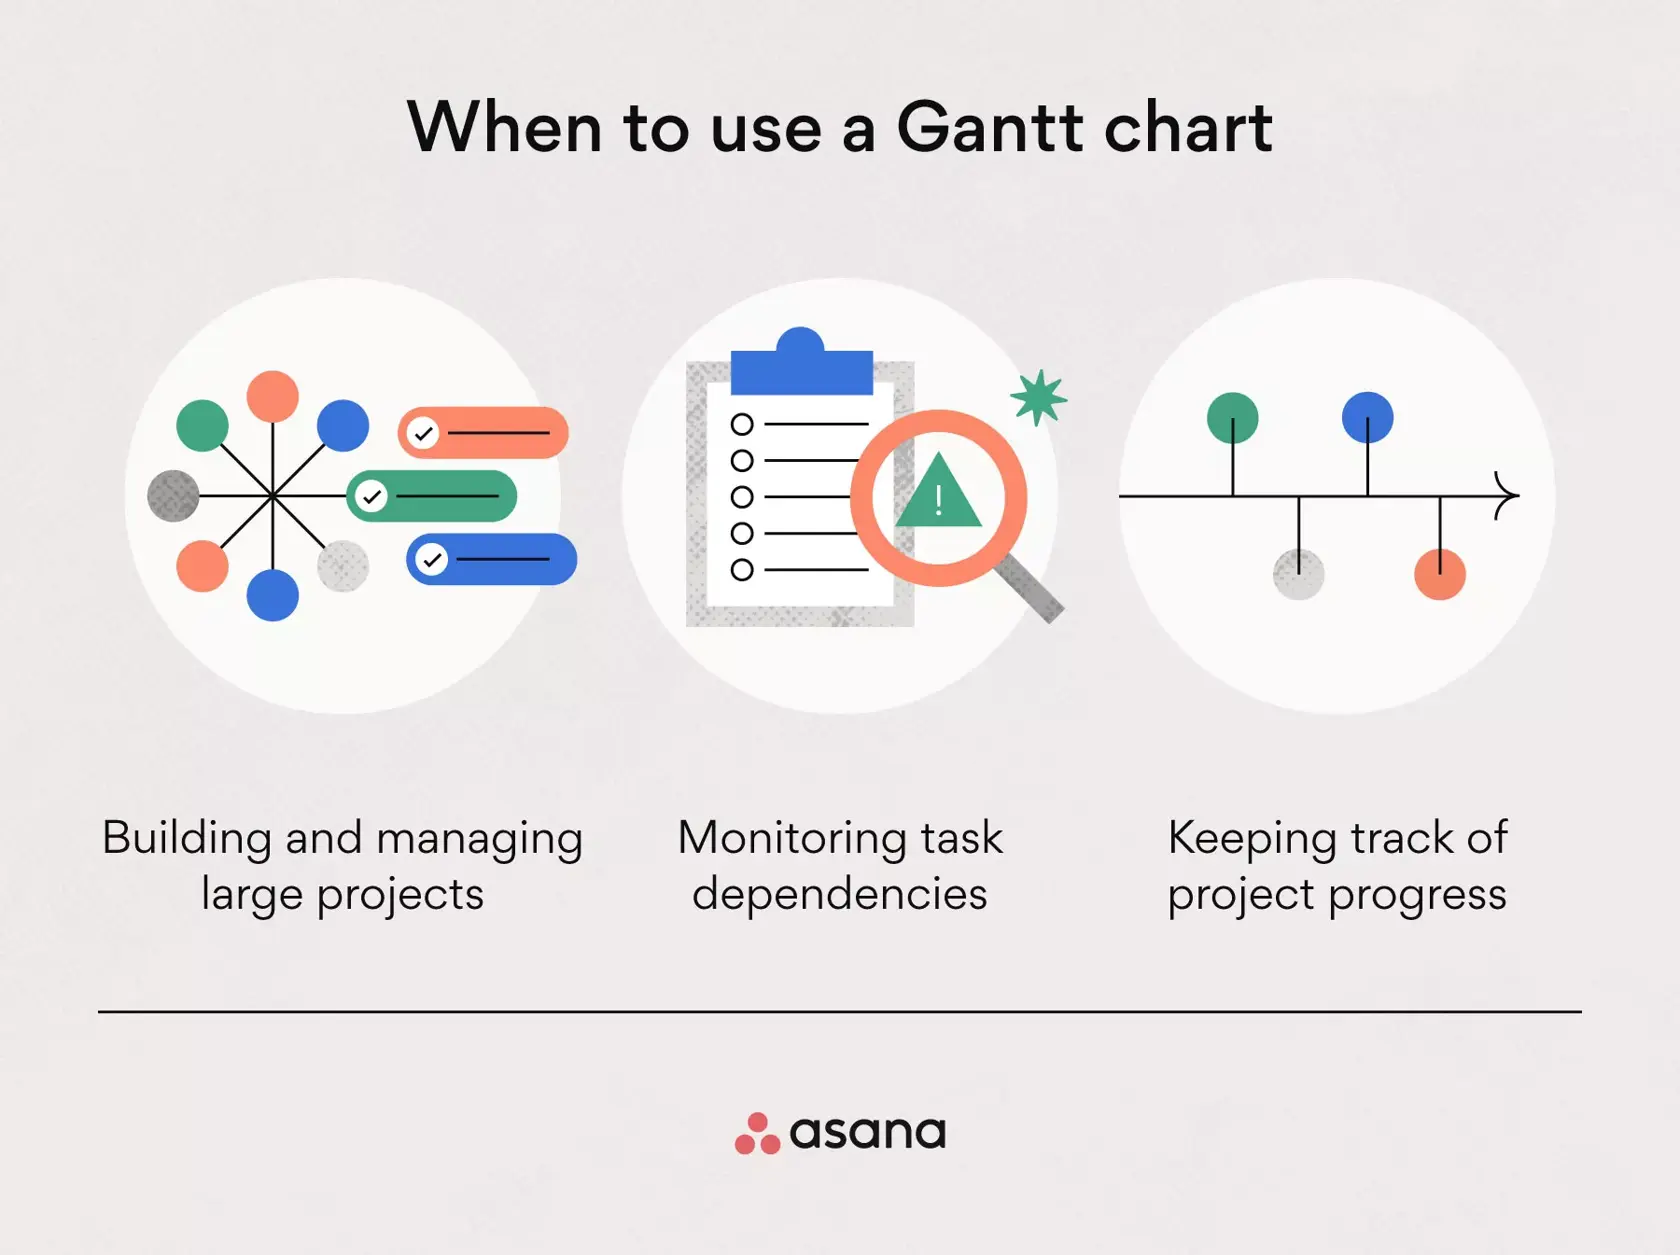 When to use a Gantt chart